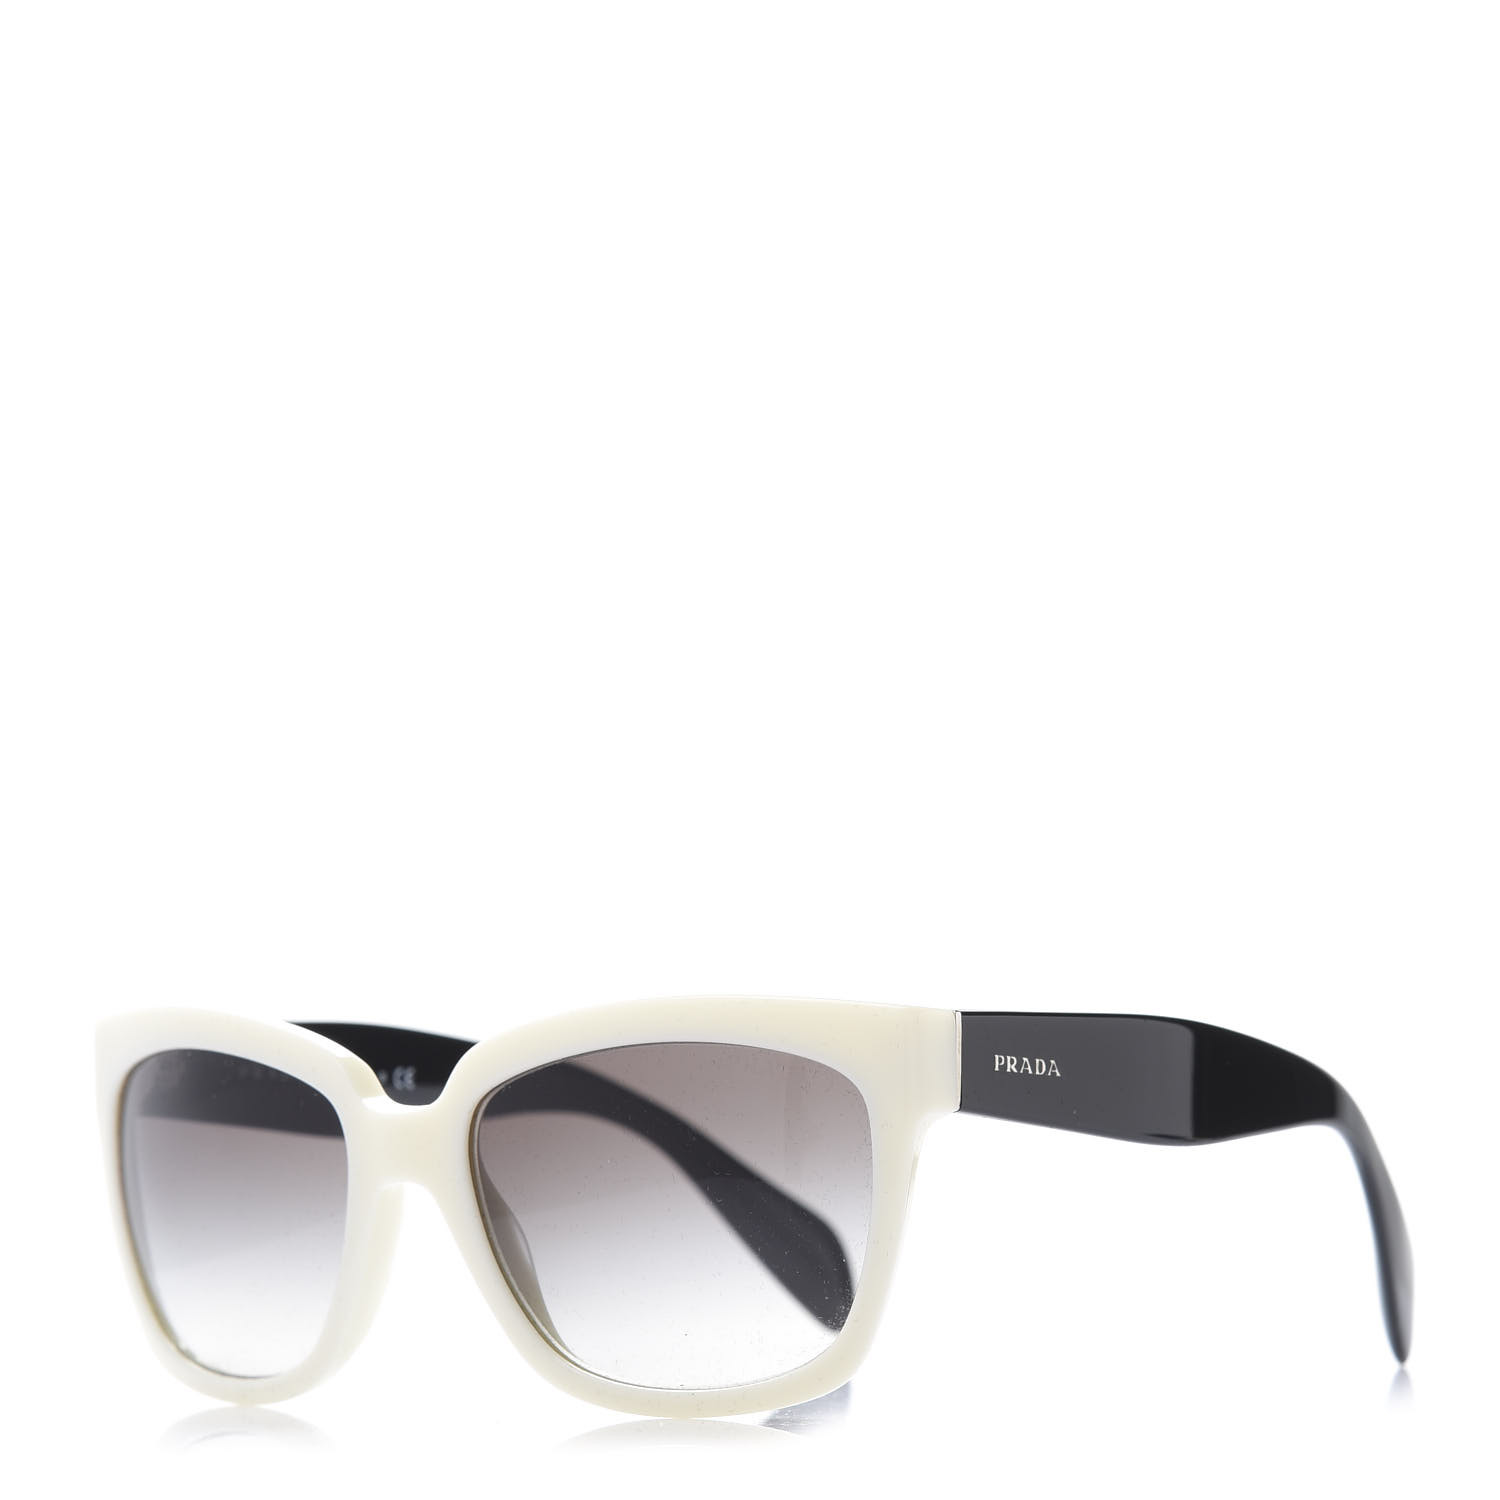 PRADA Sunglasses SPR 07P Black White 